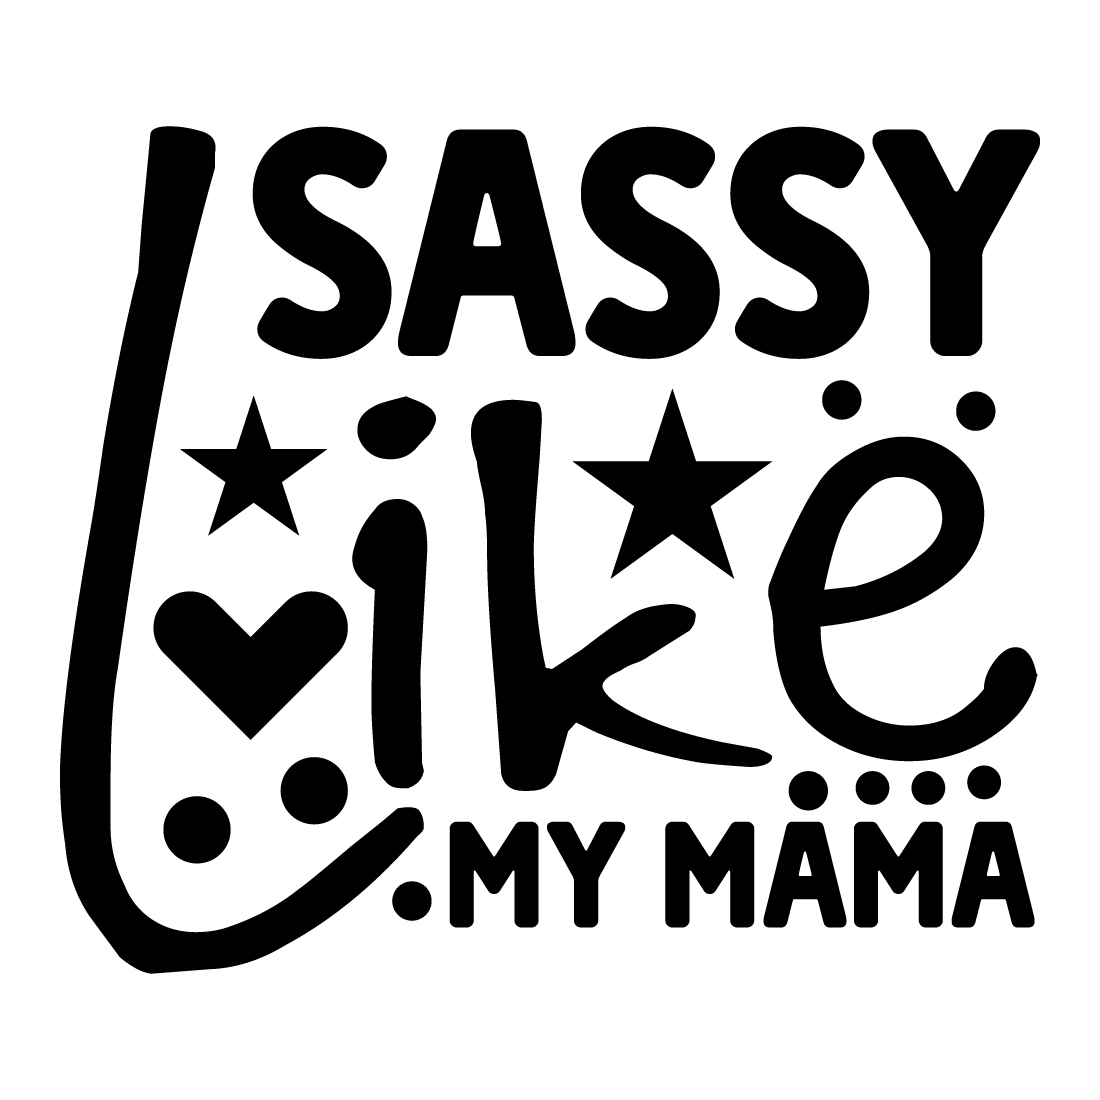 Sassy Like My Mama cover image.